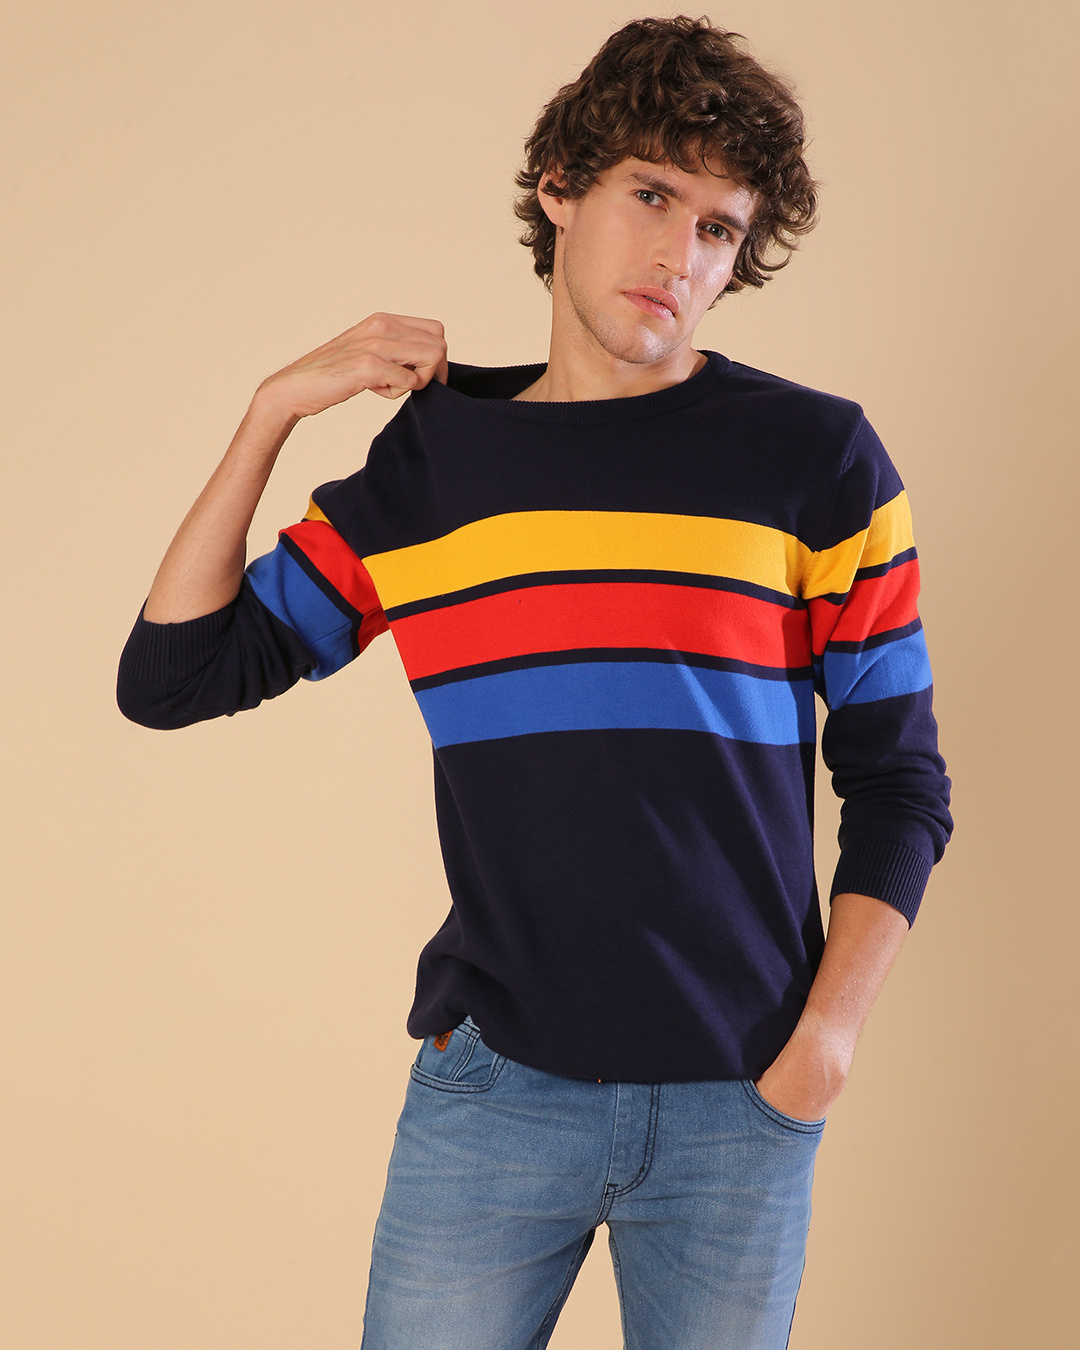 Buy Campus Sutra Men's Multicolor Color Block Regular Fit Sweater for ...